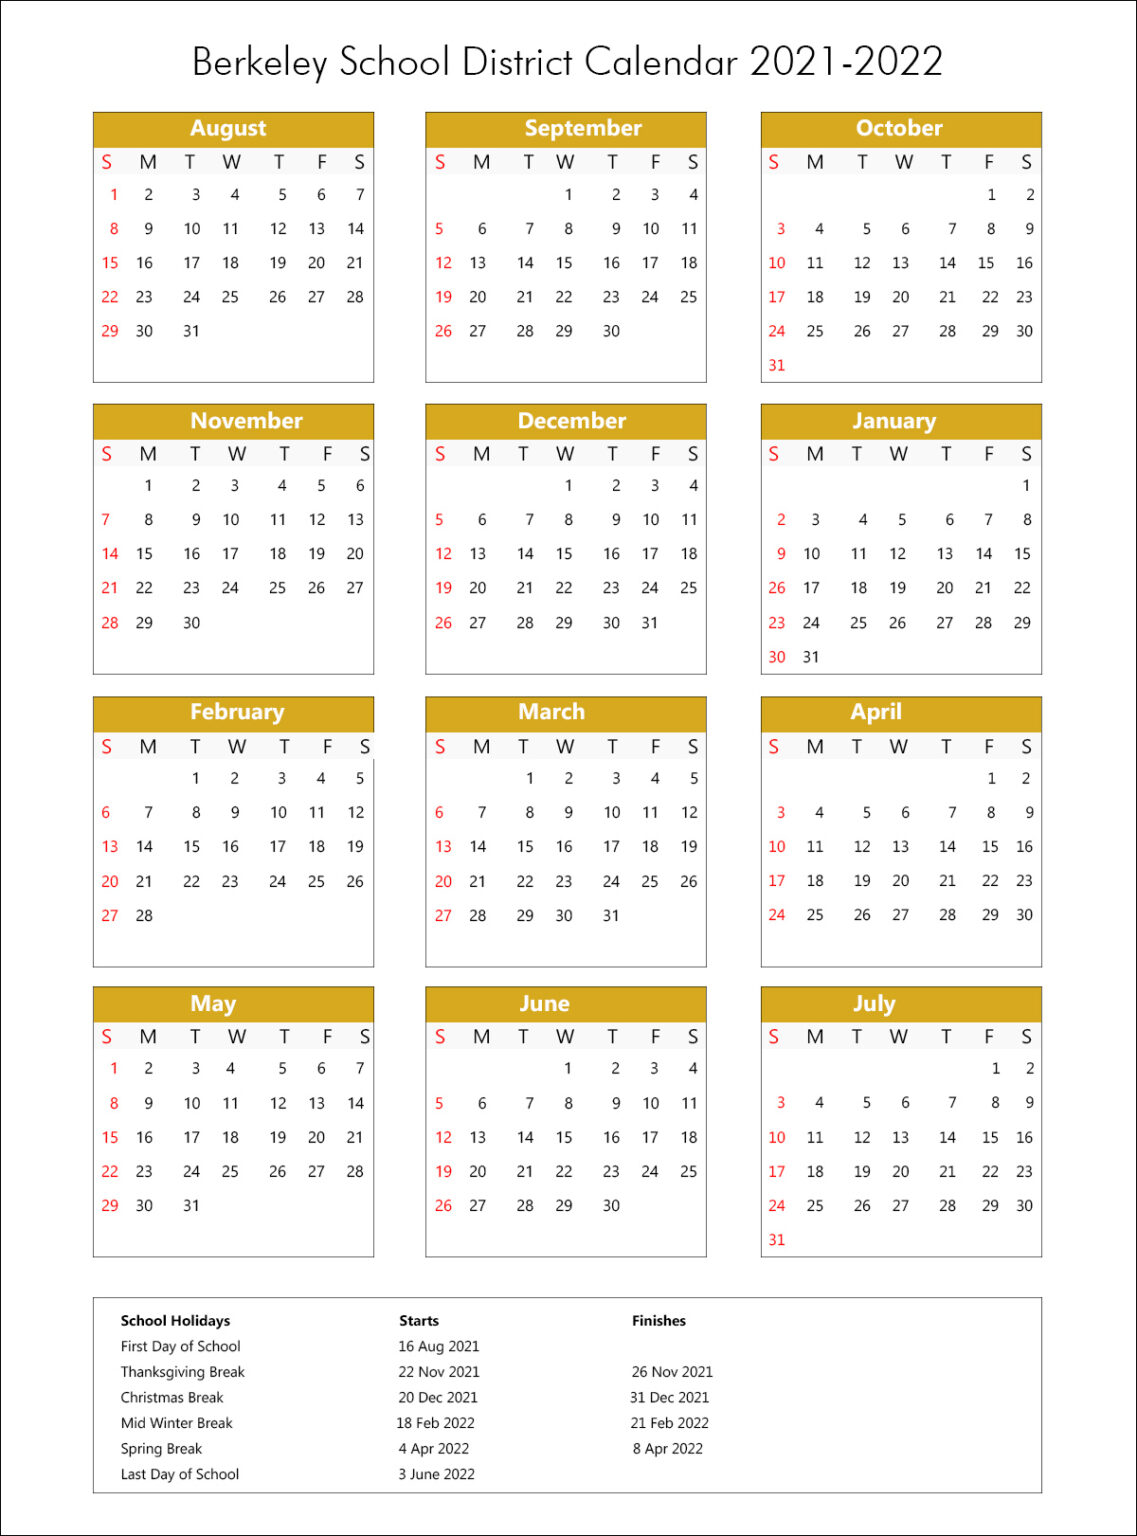 Berkeley Unified School District Calendar Holidays 20212022